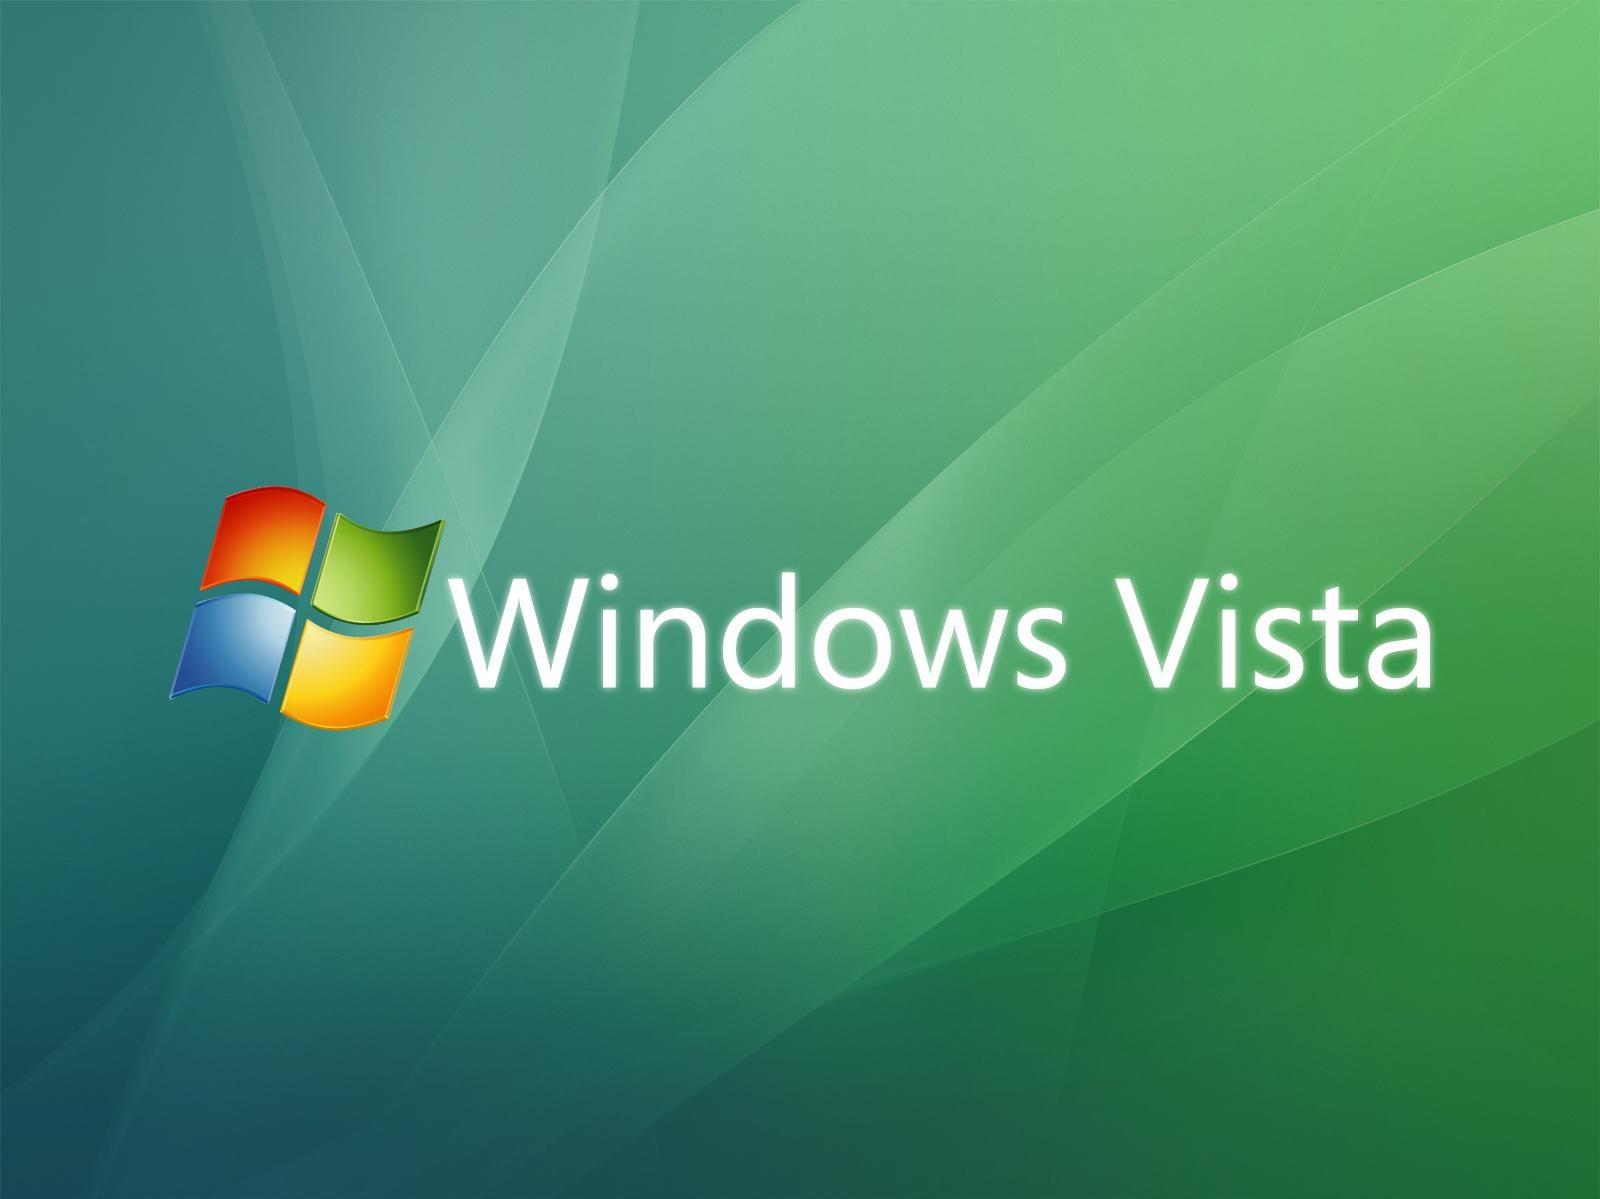 Windows Vista All Original Wallpaper Pack In High Resolution R